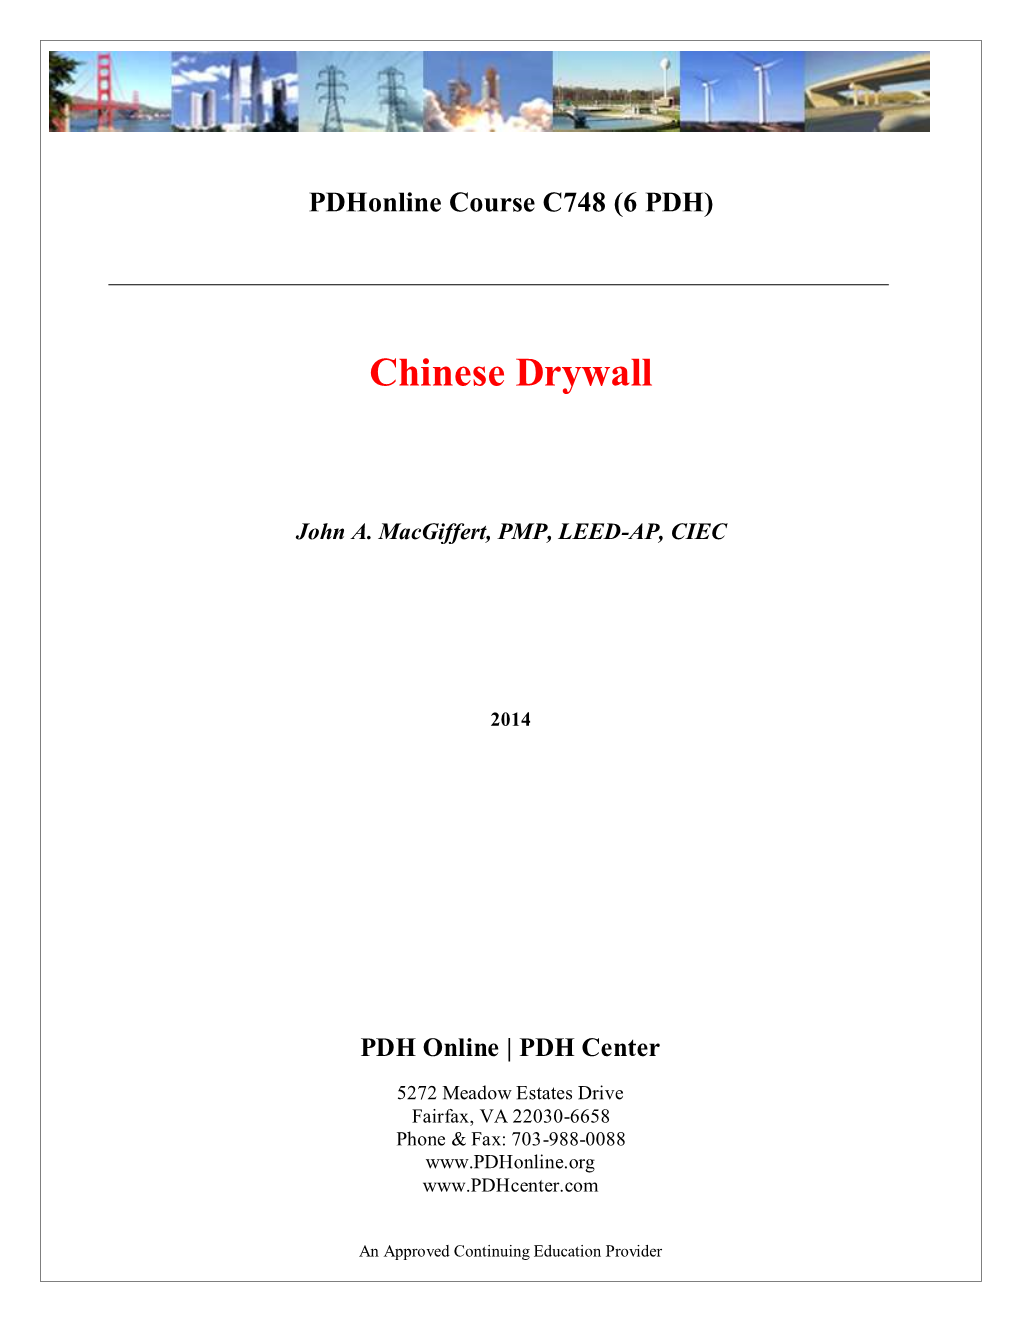 Chinese Drywall